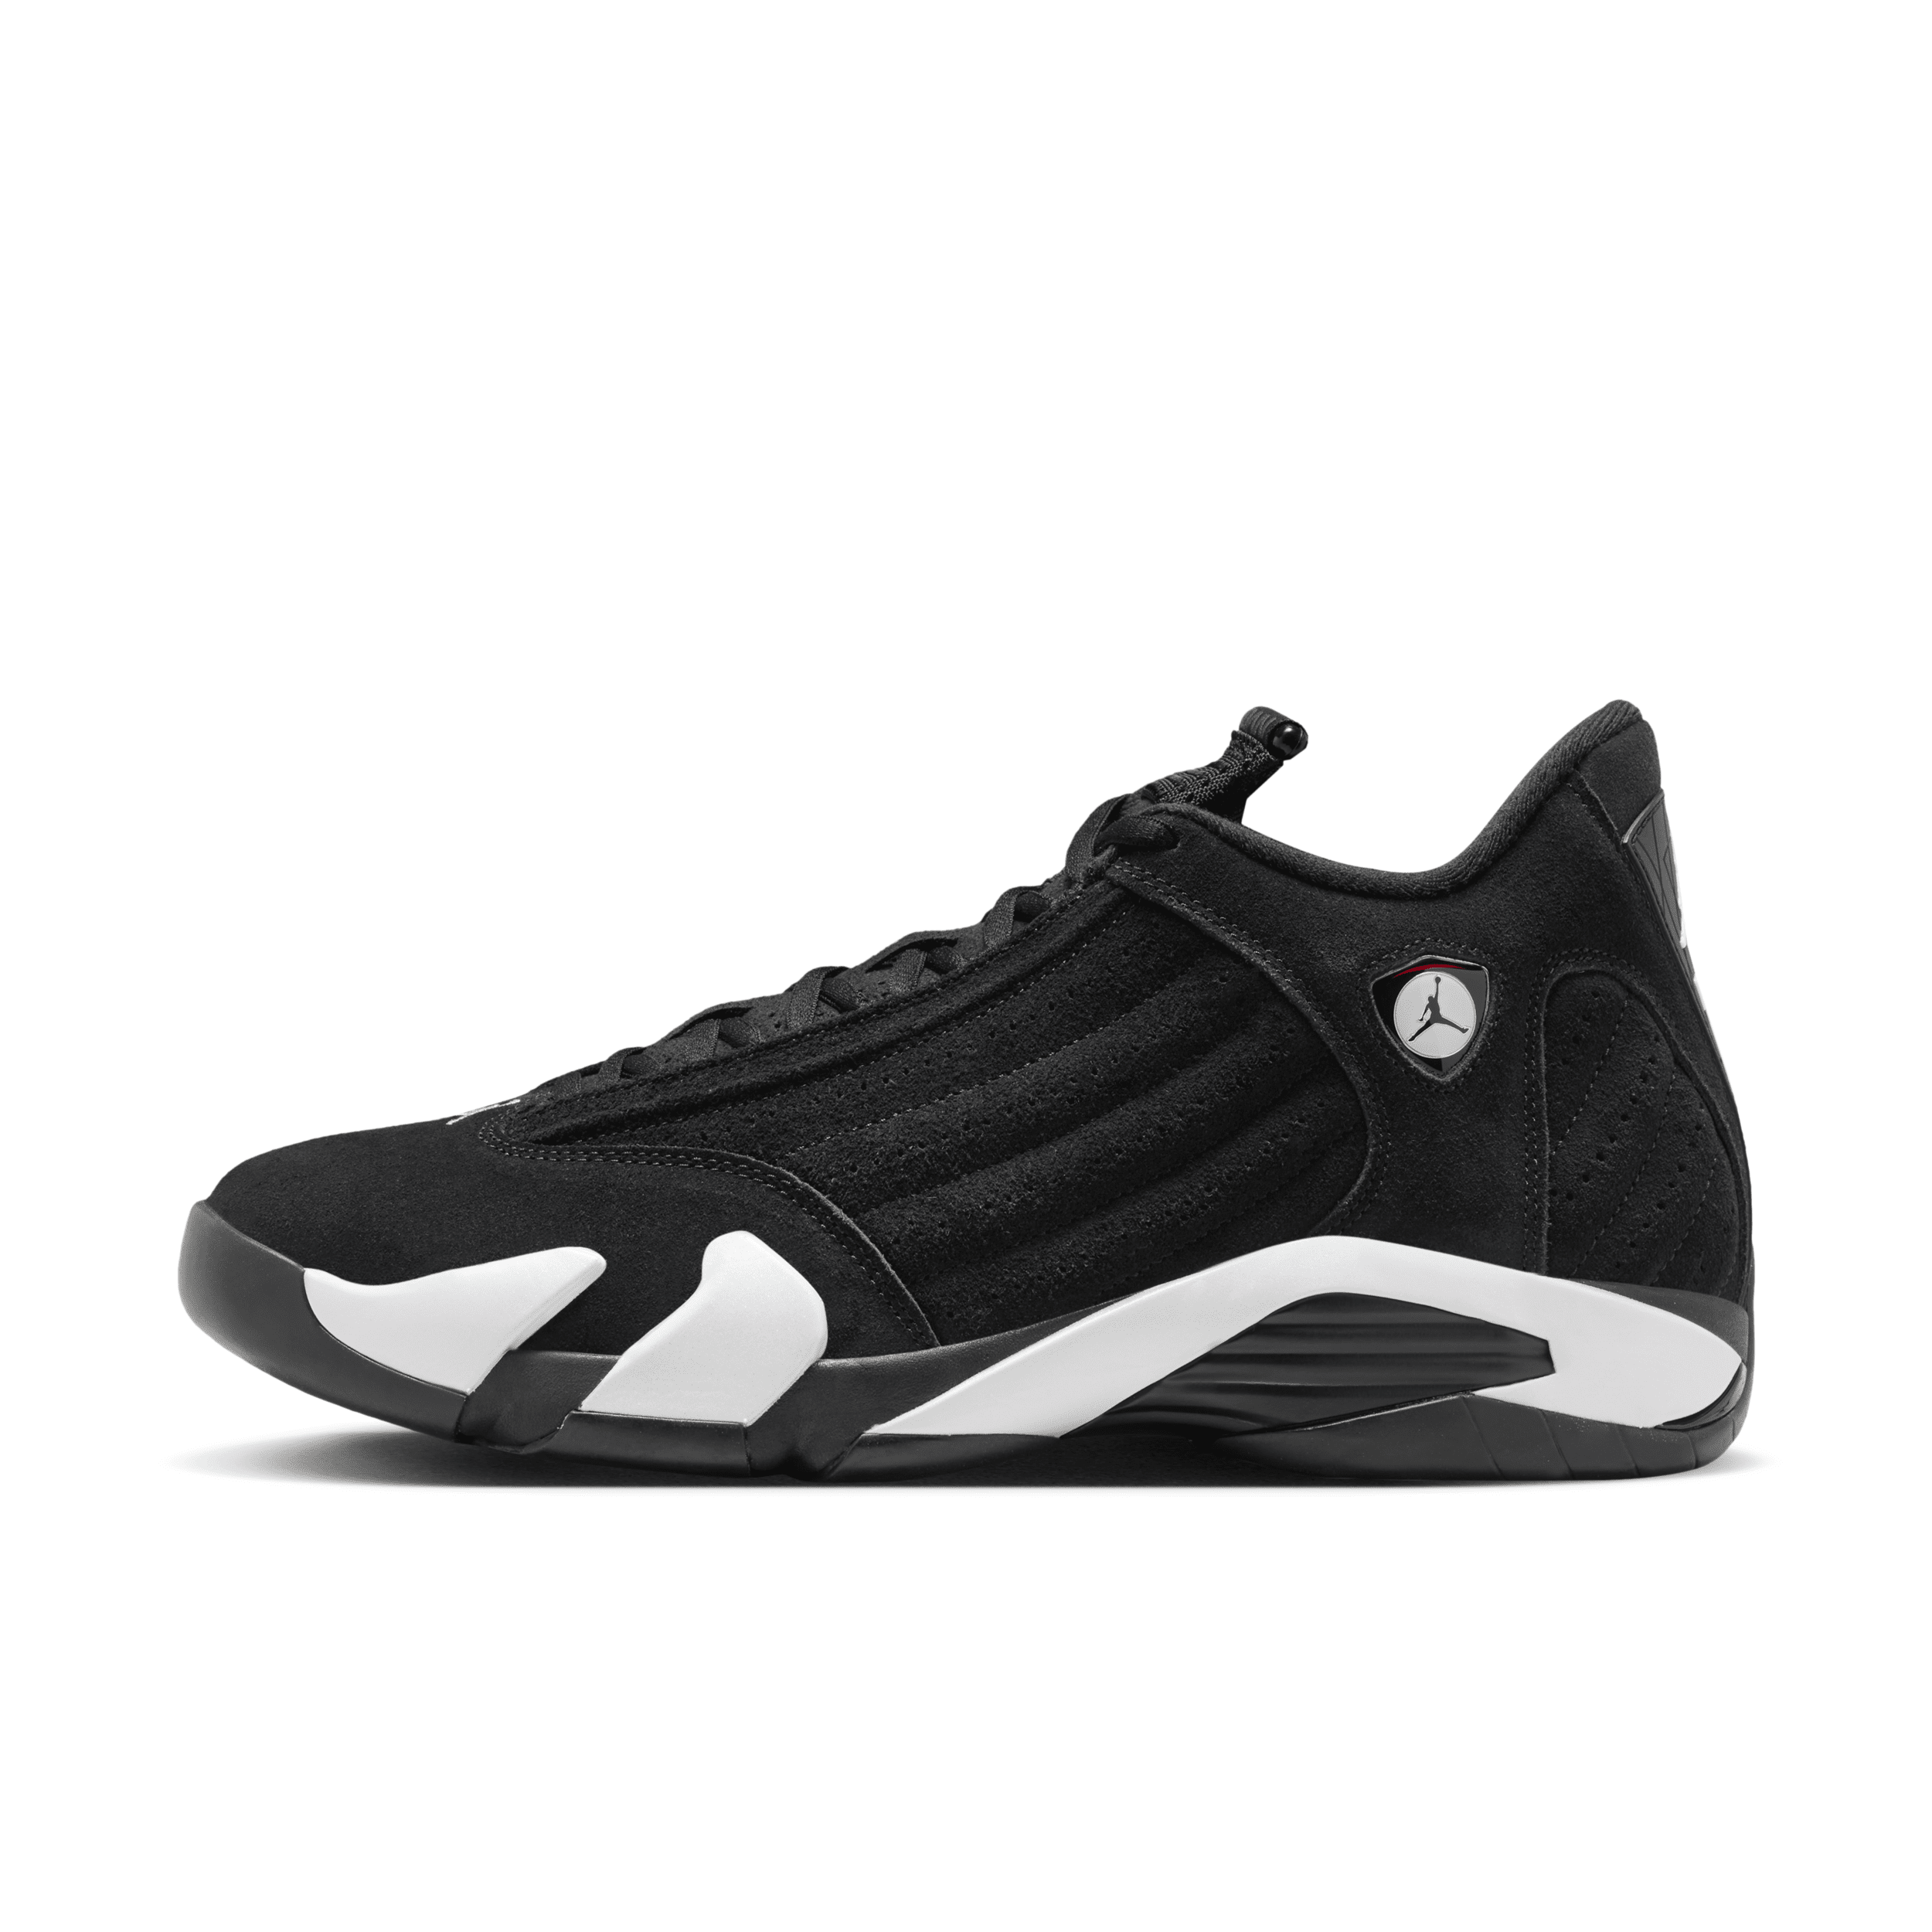 Jordan Men's Air  14 "black/white" Shoes